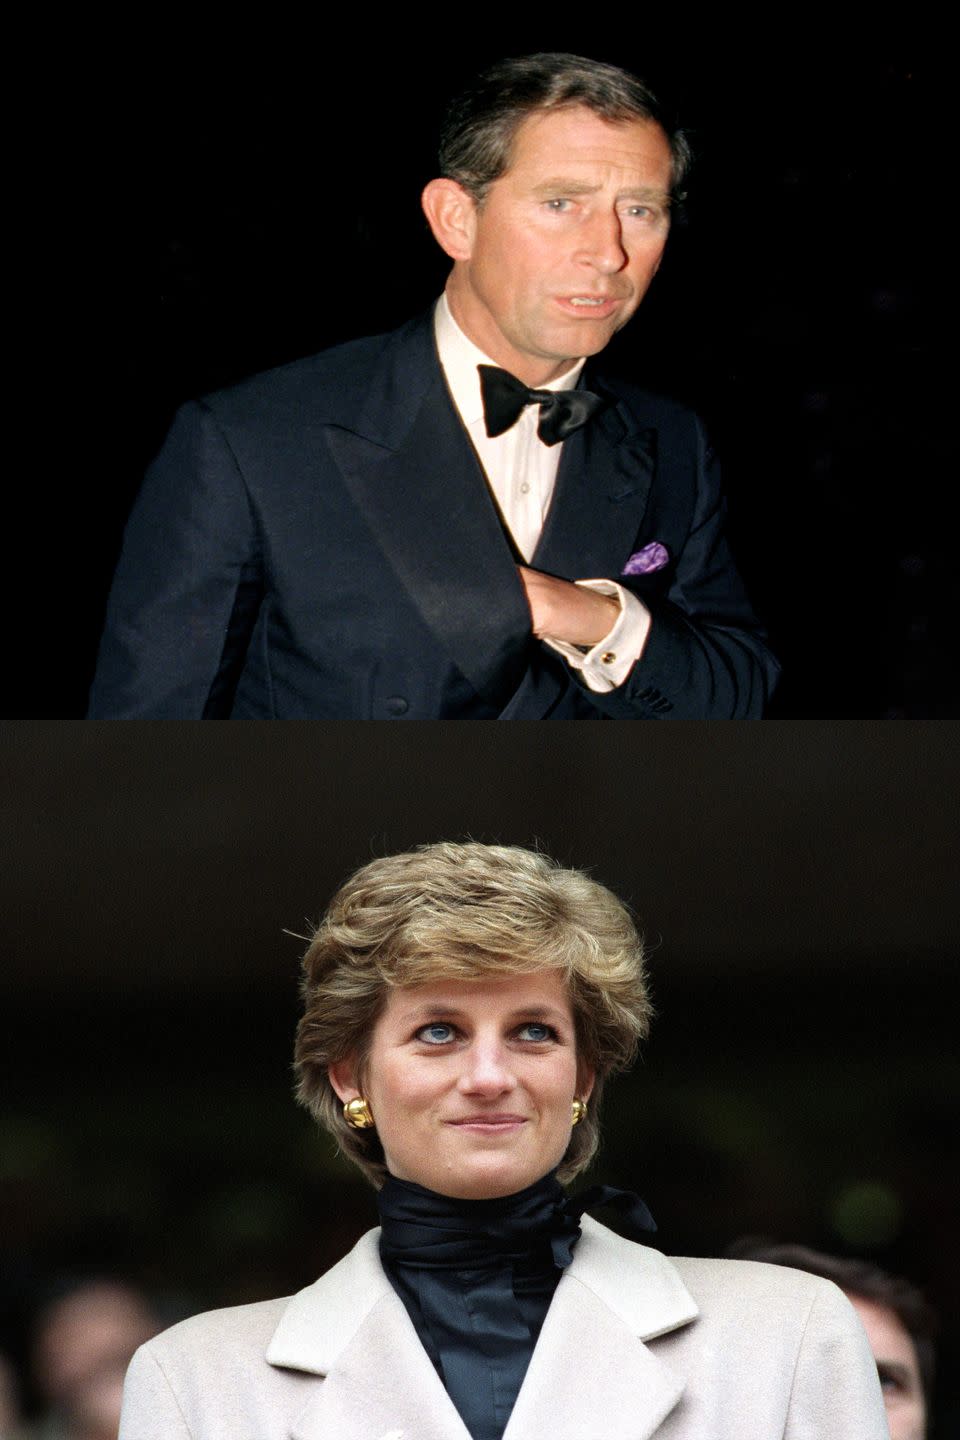 1995: Prince Charles vs. Princess Diana